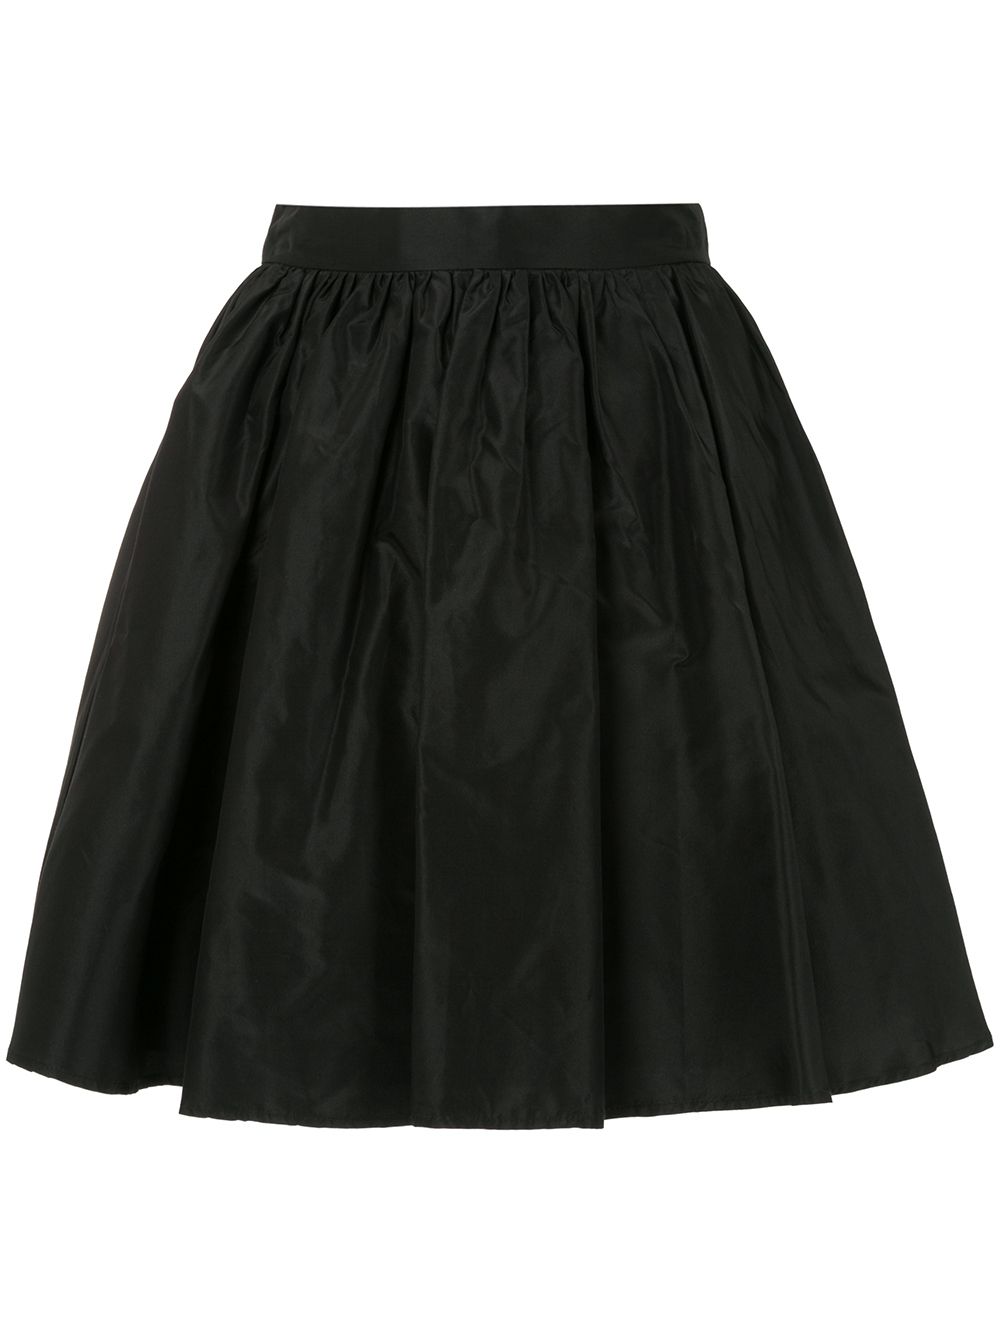 Macgraw Canary high-waisted full skirt - Black von Macgraw